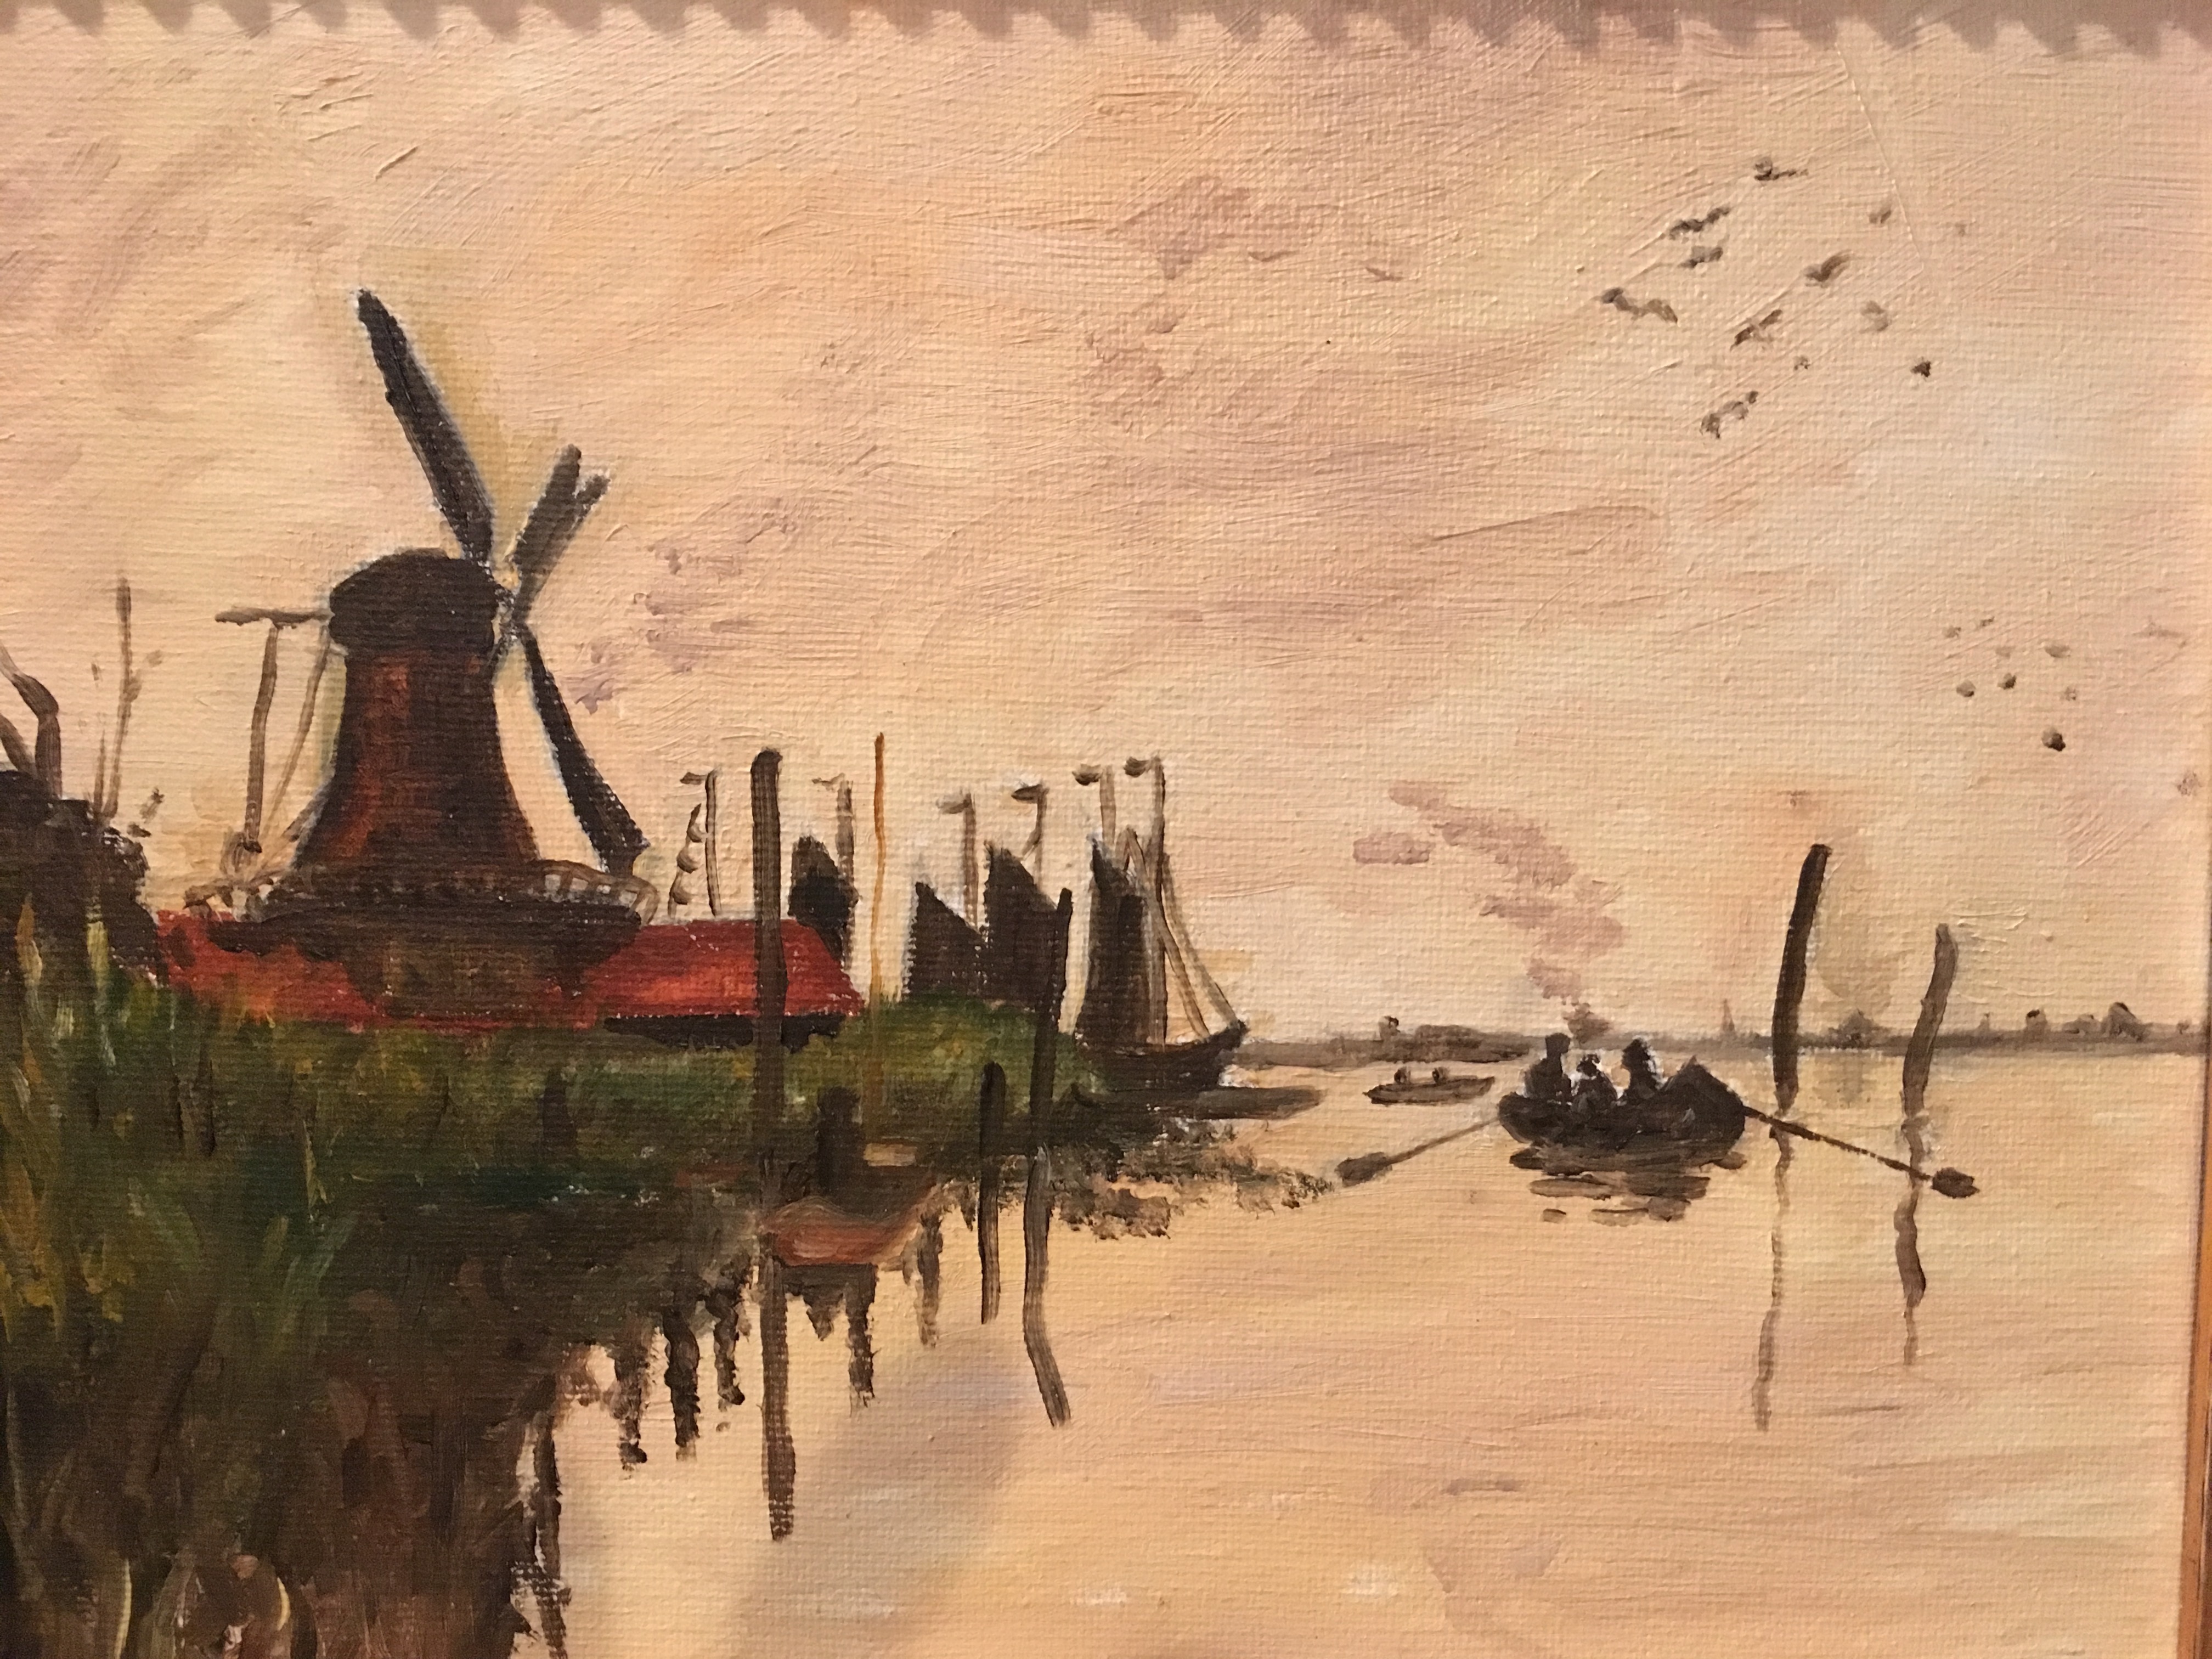 Celeste Fondaco's Windmill